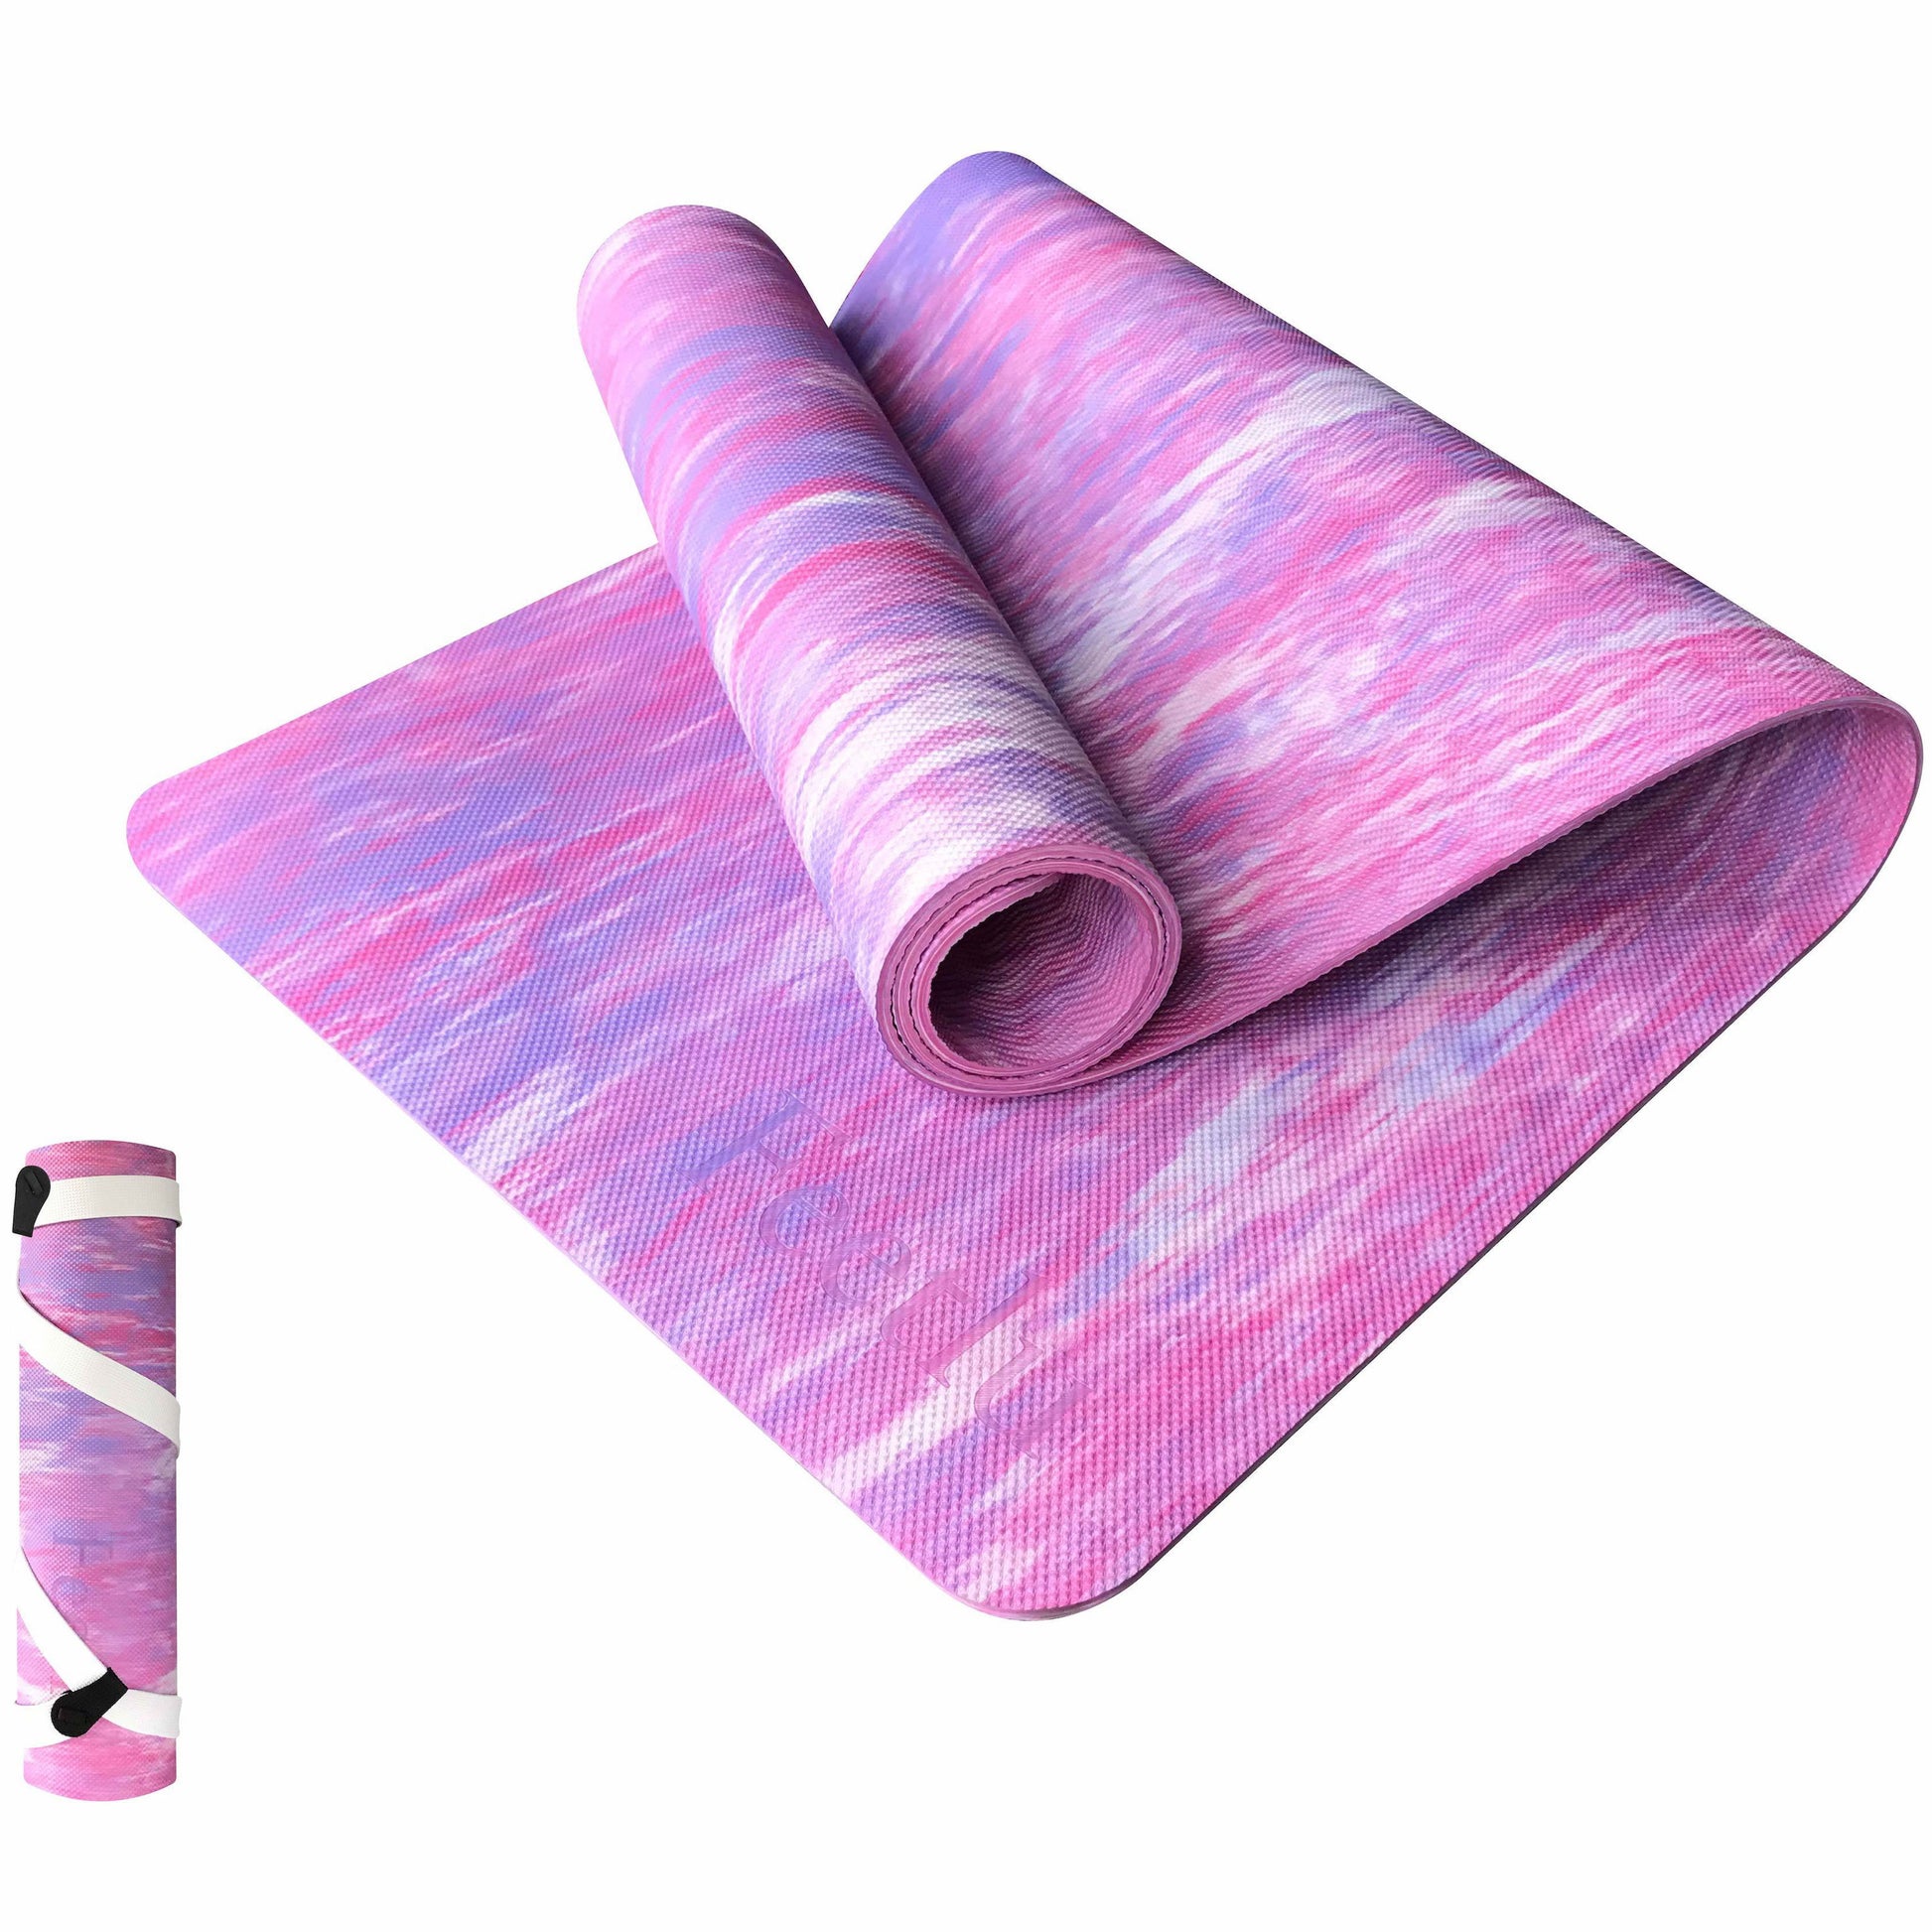 Art Yoga Mat 6mm (1/4)- Pink/Purple/White